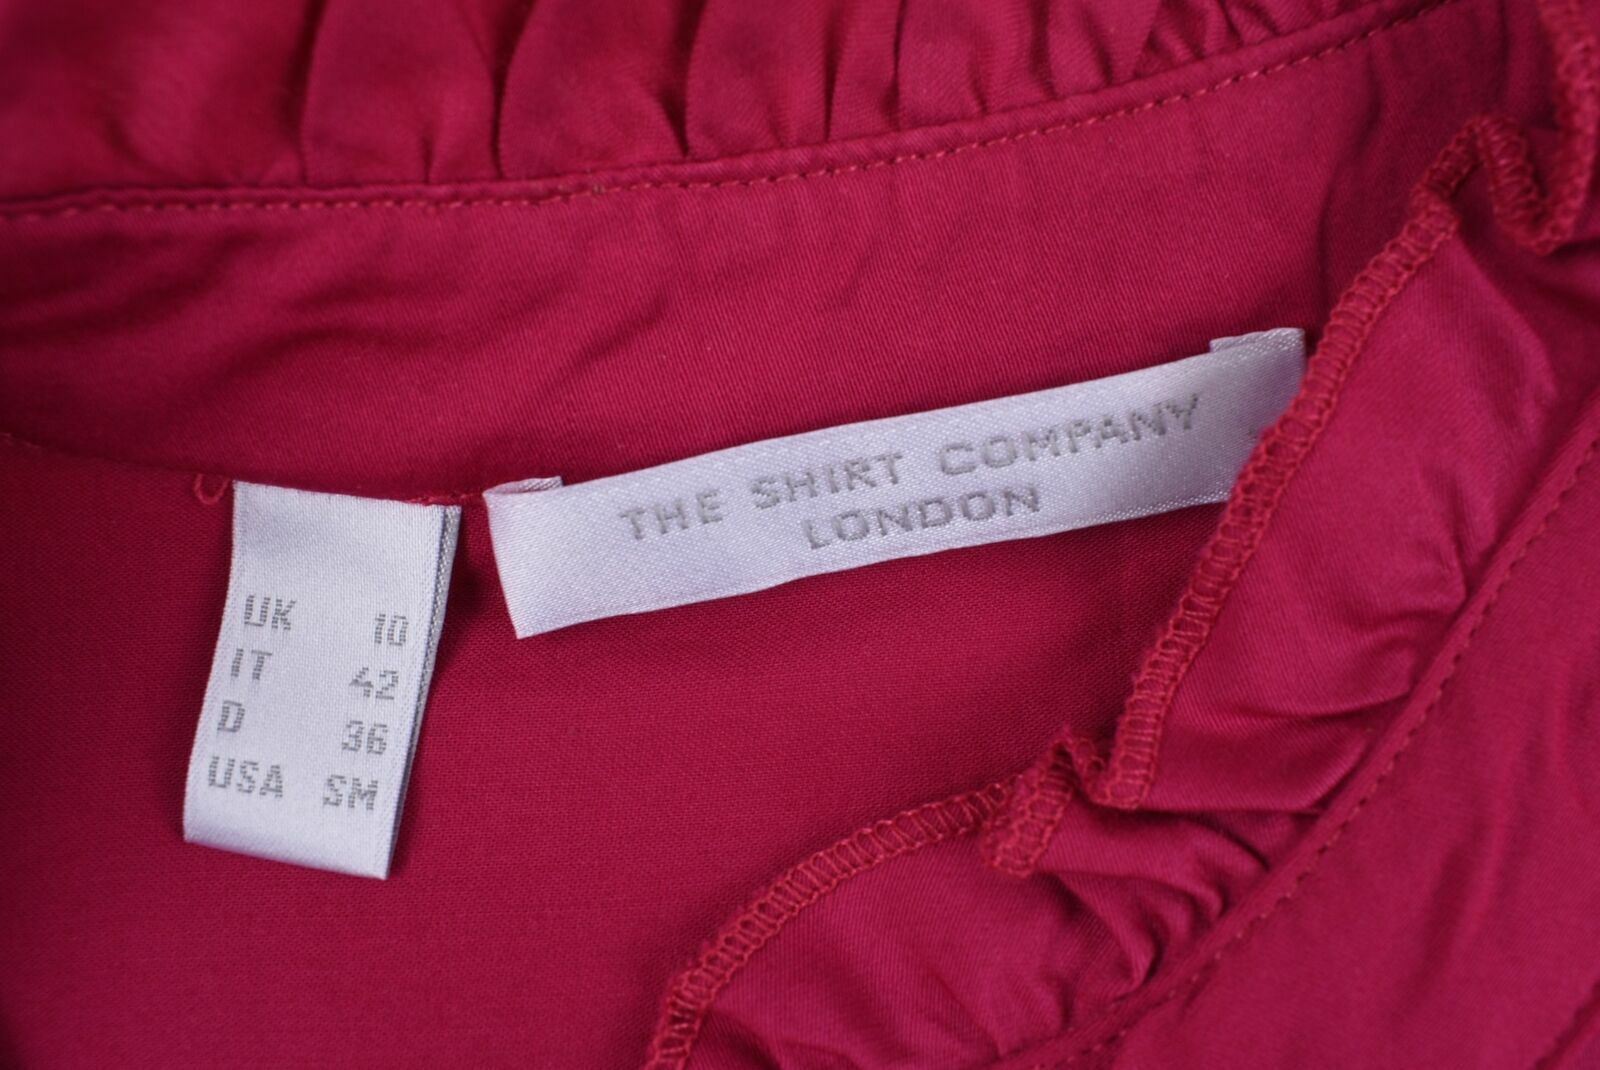 THE SHIRT COMPANY Women's Long Sleeved Button Up 'Carlotta' Shirt- size UK 12